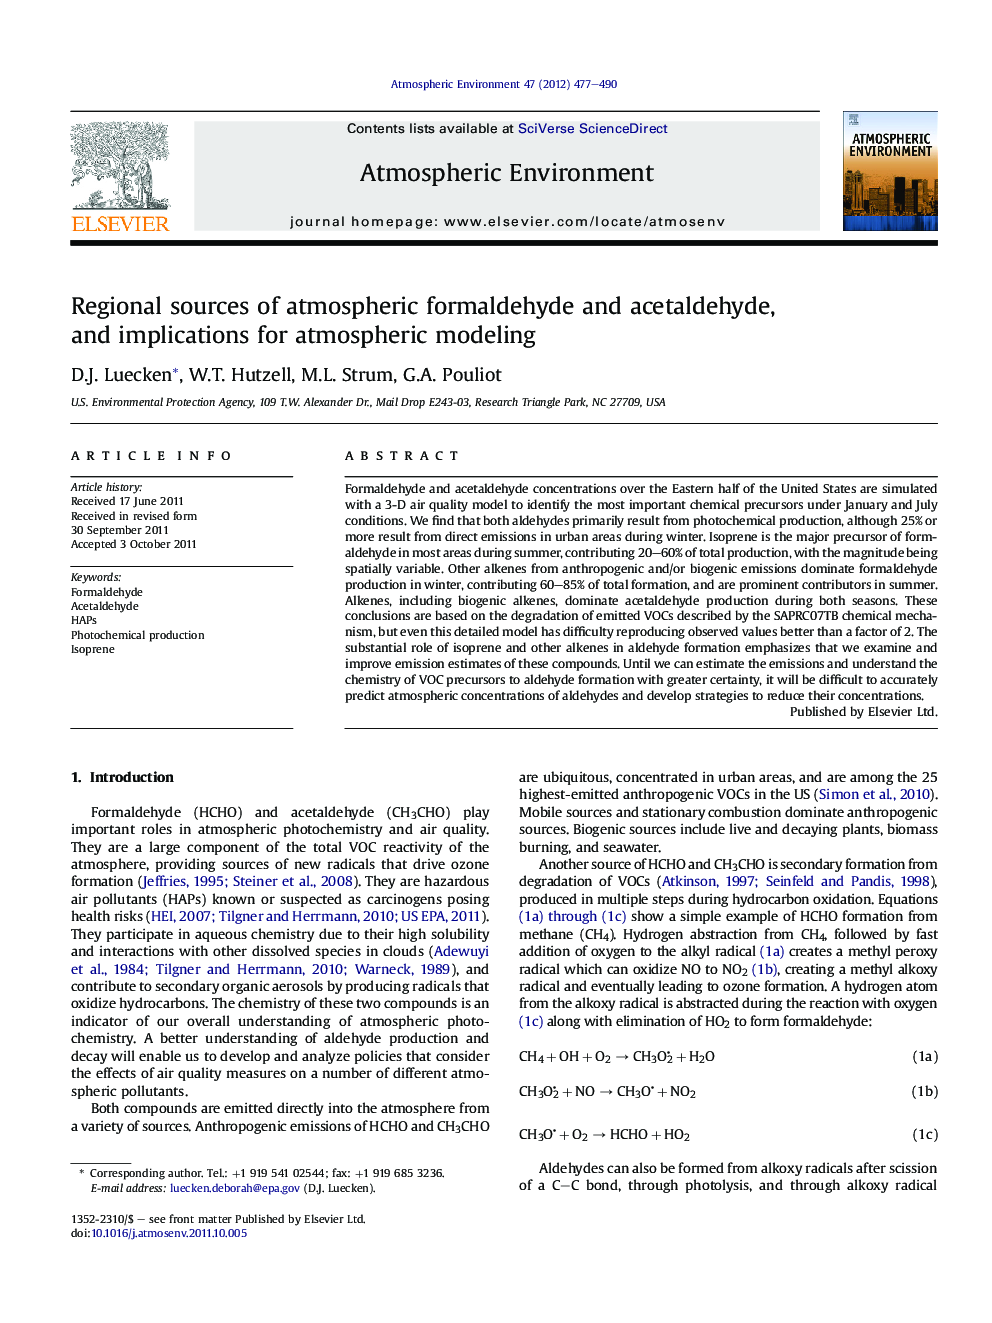 Regional sources of atmospheric formaldehyde and acetaldehyde, and implications for atmospheric modeling